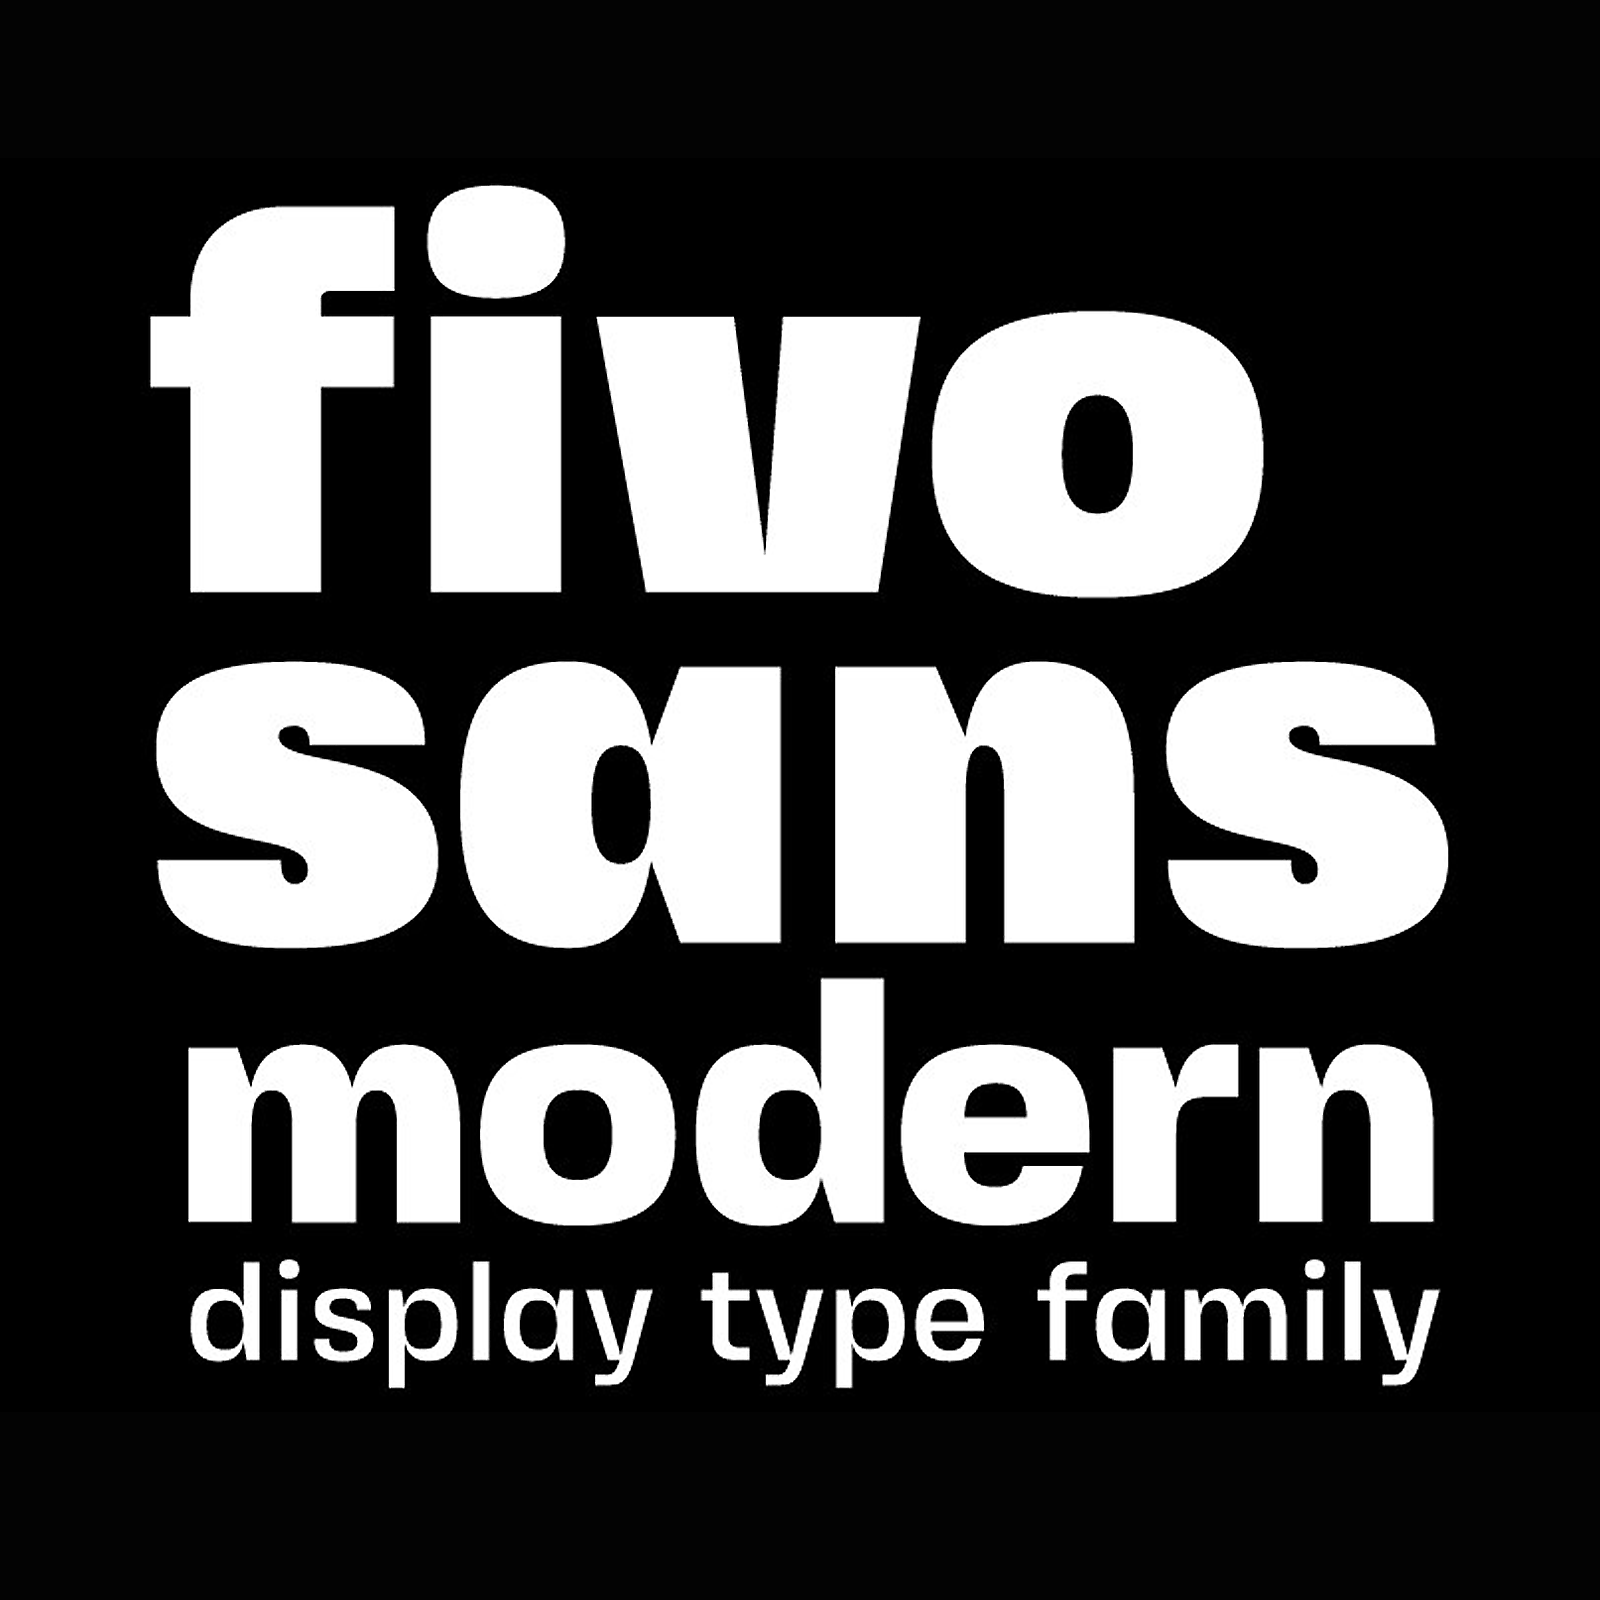 Пример шрифта Fivo Sans Modern